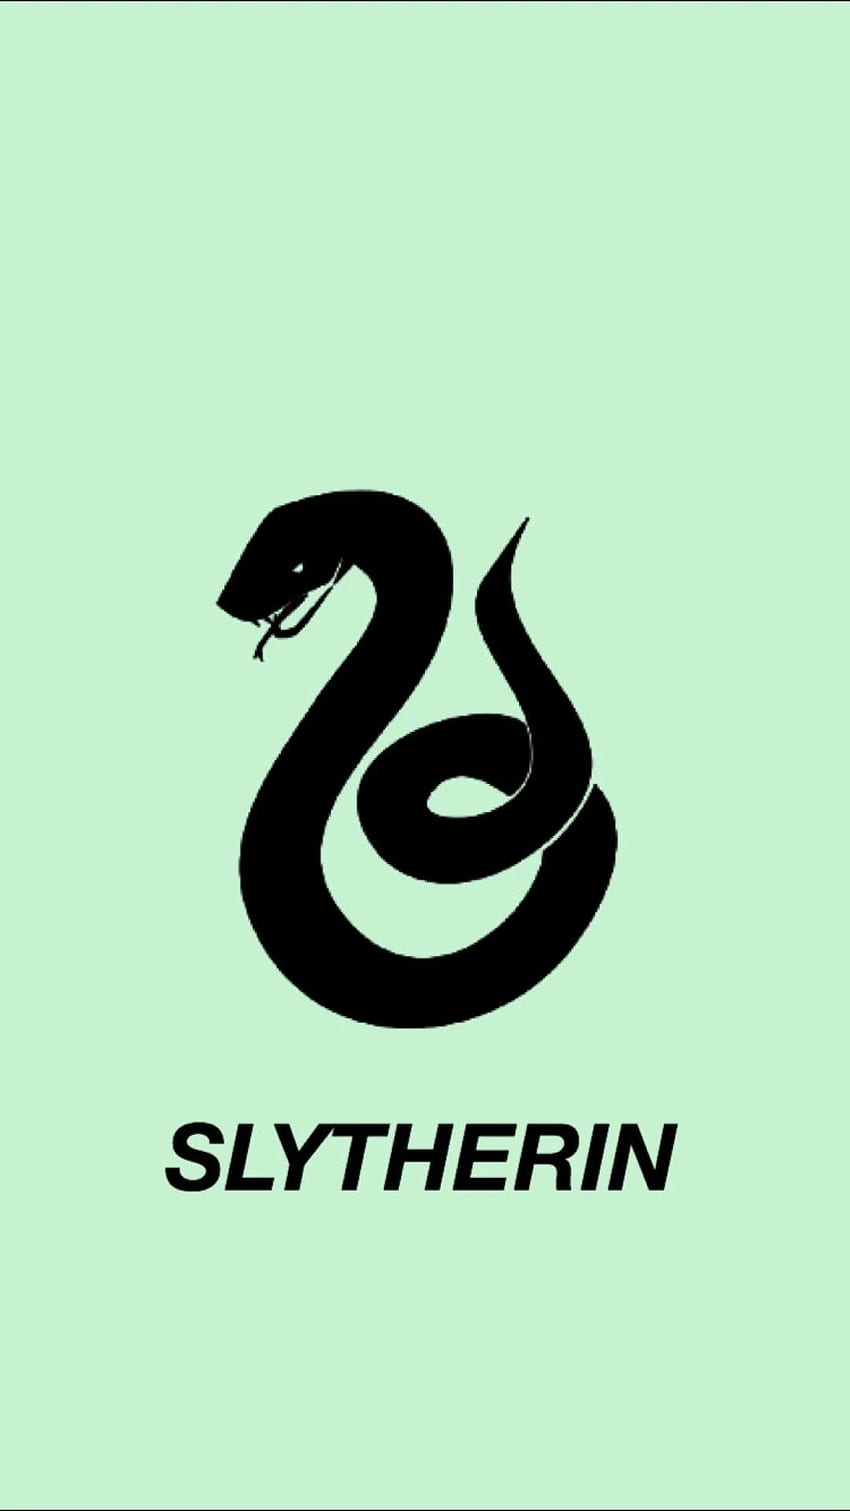 Slytherin 미학 slytherin 잠금 화면 slytherin slytherin 자부심 잠금 화면 잠금 화면 wallpape. Slytherin, Slytherin, 해리 포터 아이폰, 귀여운 Slytherin HD 전화 배경 화면